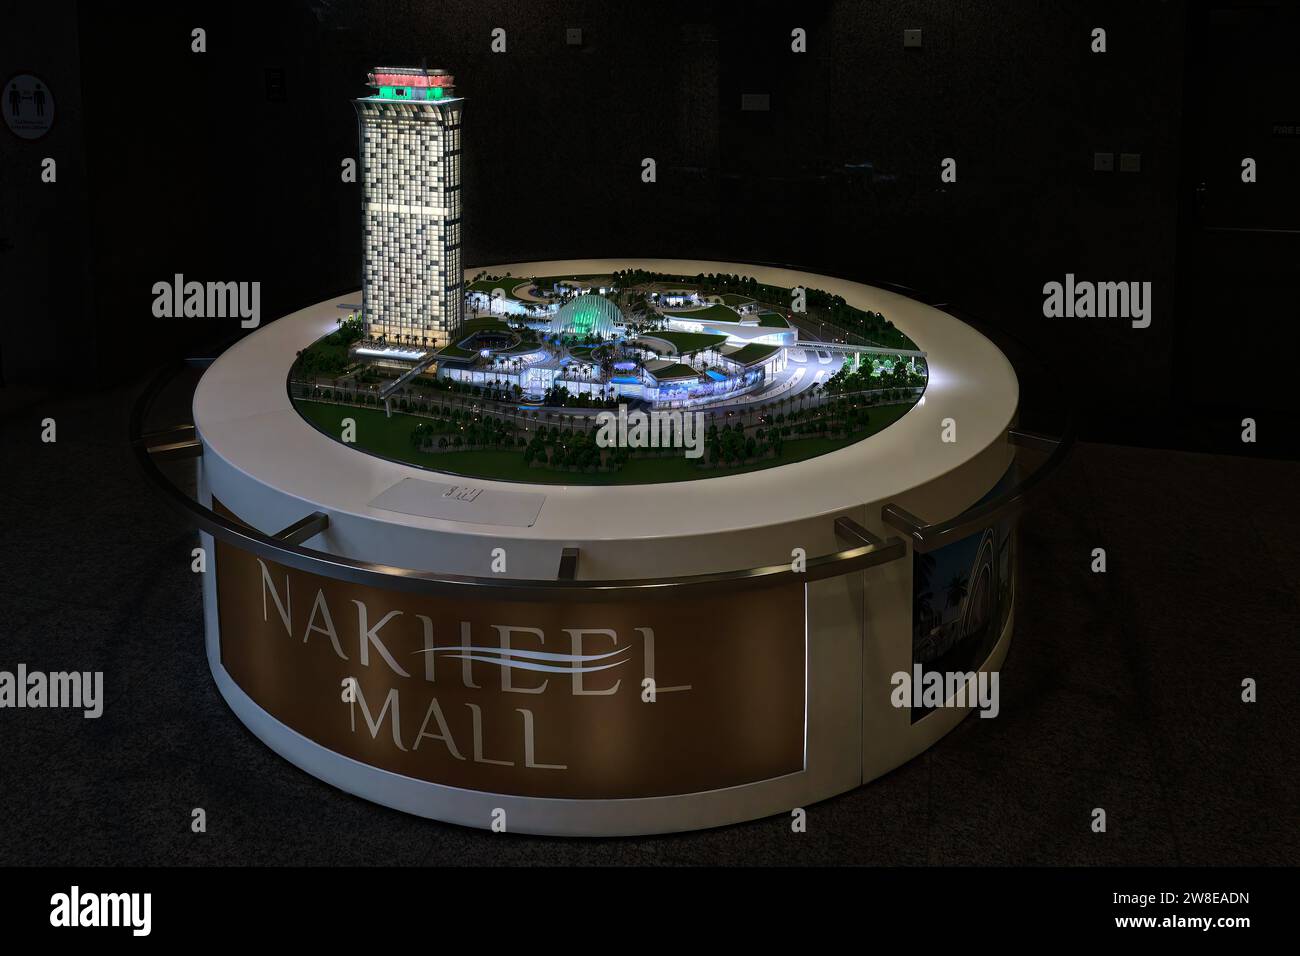 Miniature model of Nakheel Mall and surrounding landscape in Nakheel Mall, Dubai, United Arab Emirates Stock Photo